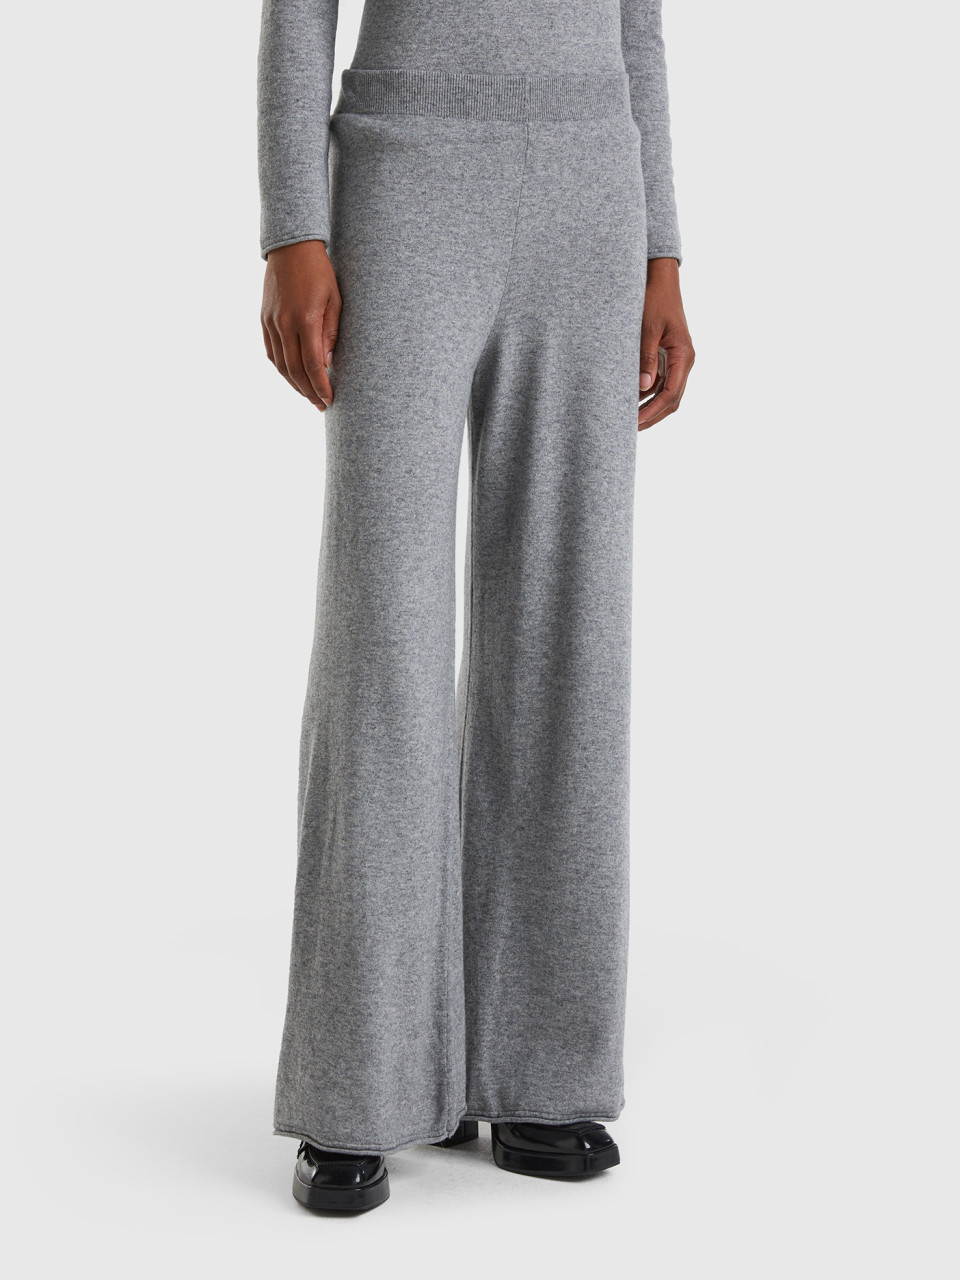 Benetton, Light Gray Wide Leg Trousers In Cashmere And Wool Blend, Light Gray, Women